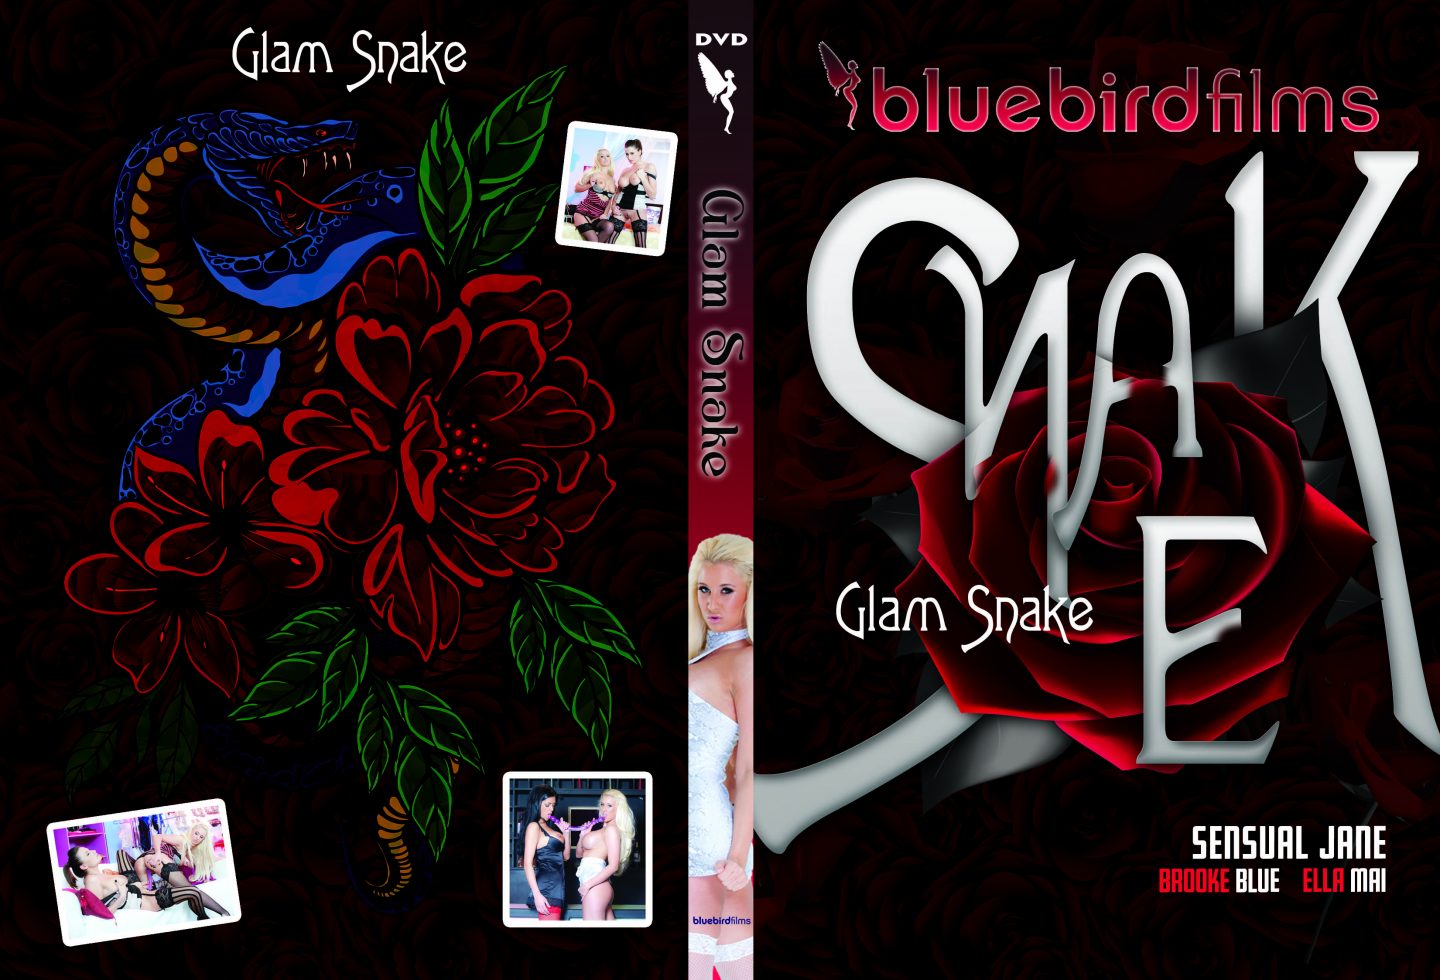 Bluebird Films presents Glam Snake